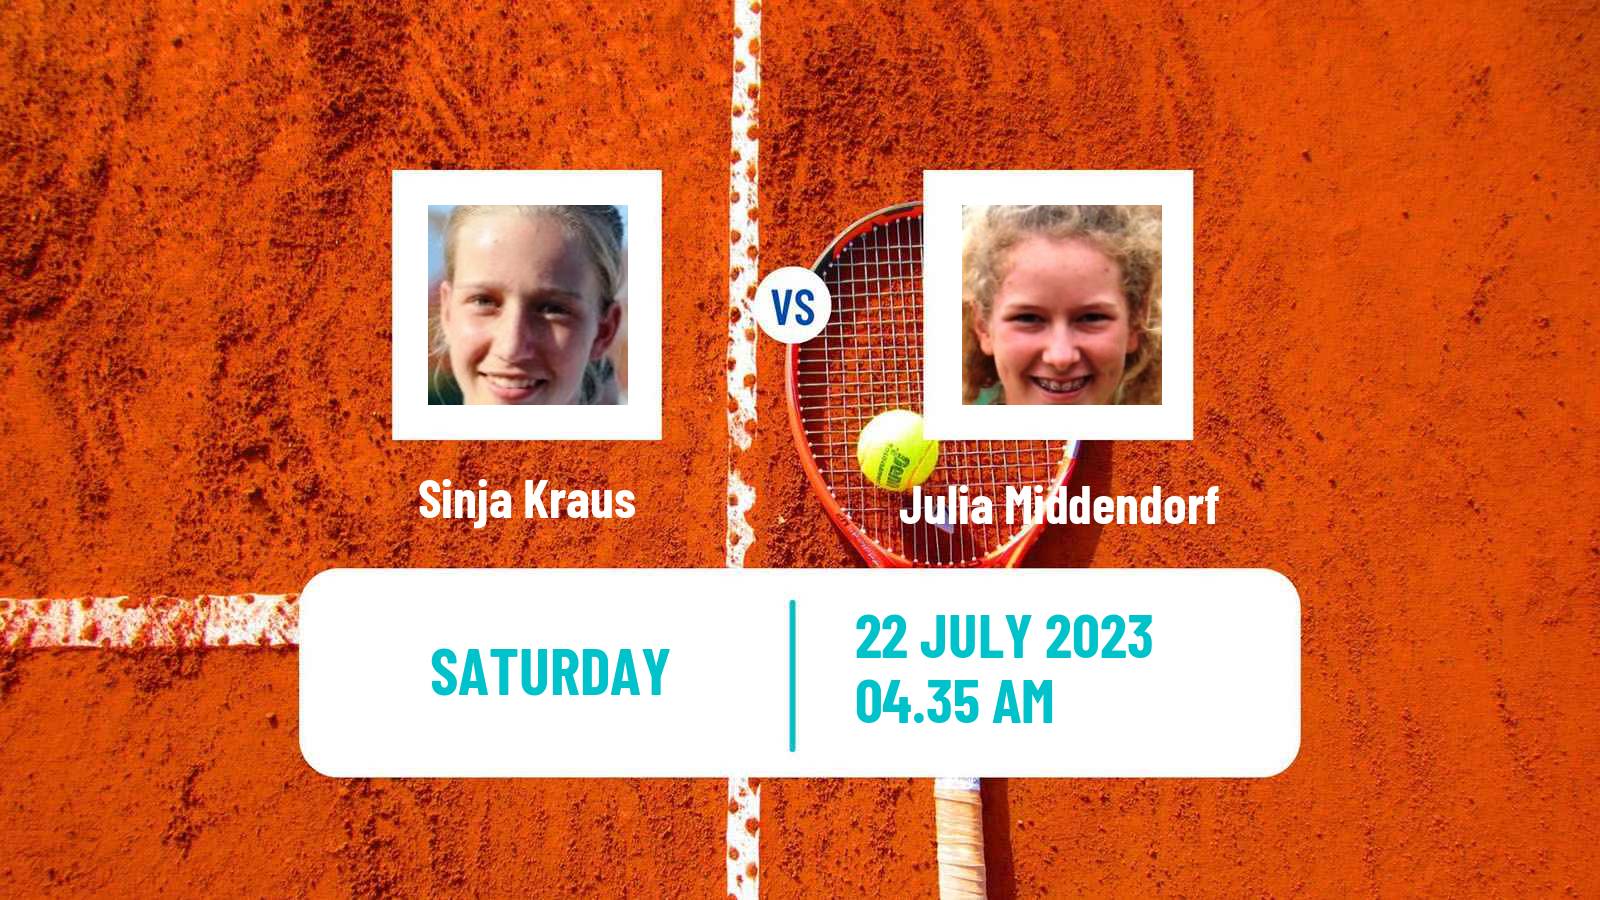 Tennis WTA Hamburg Sinja Kraus - Julia Middendorf